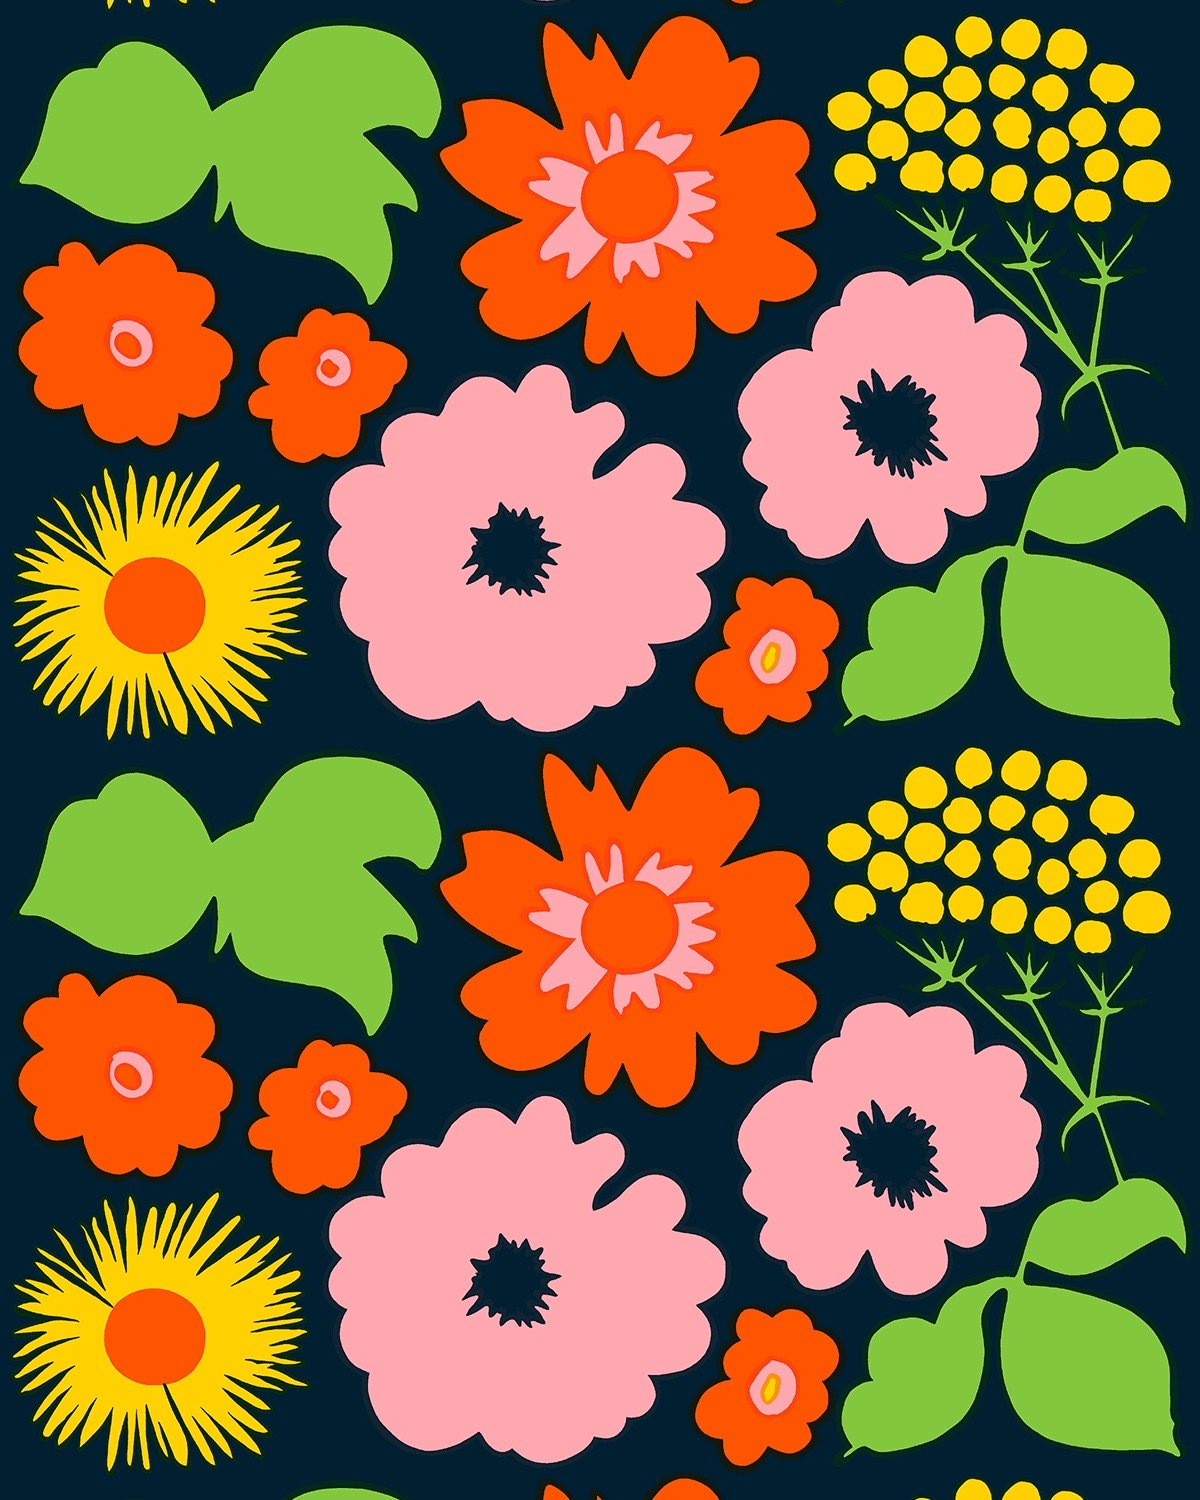 Marimekko print patterns with various flowers